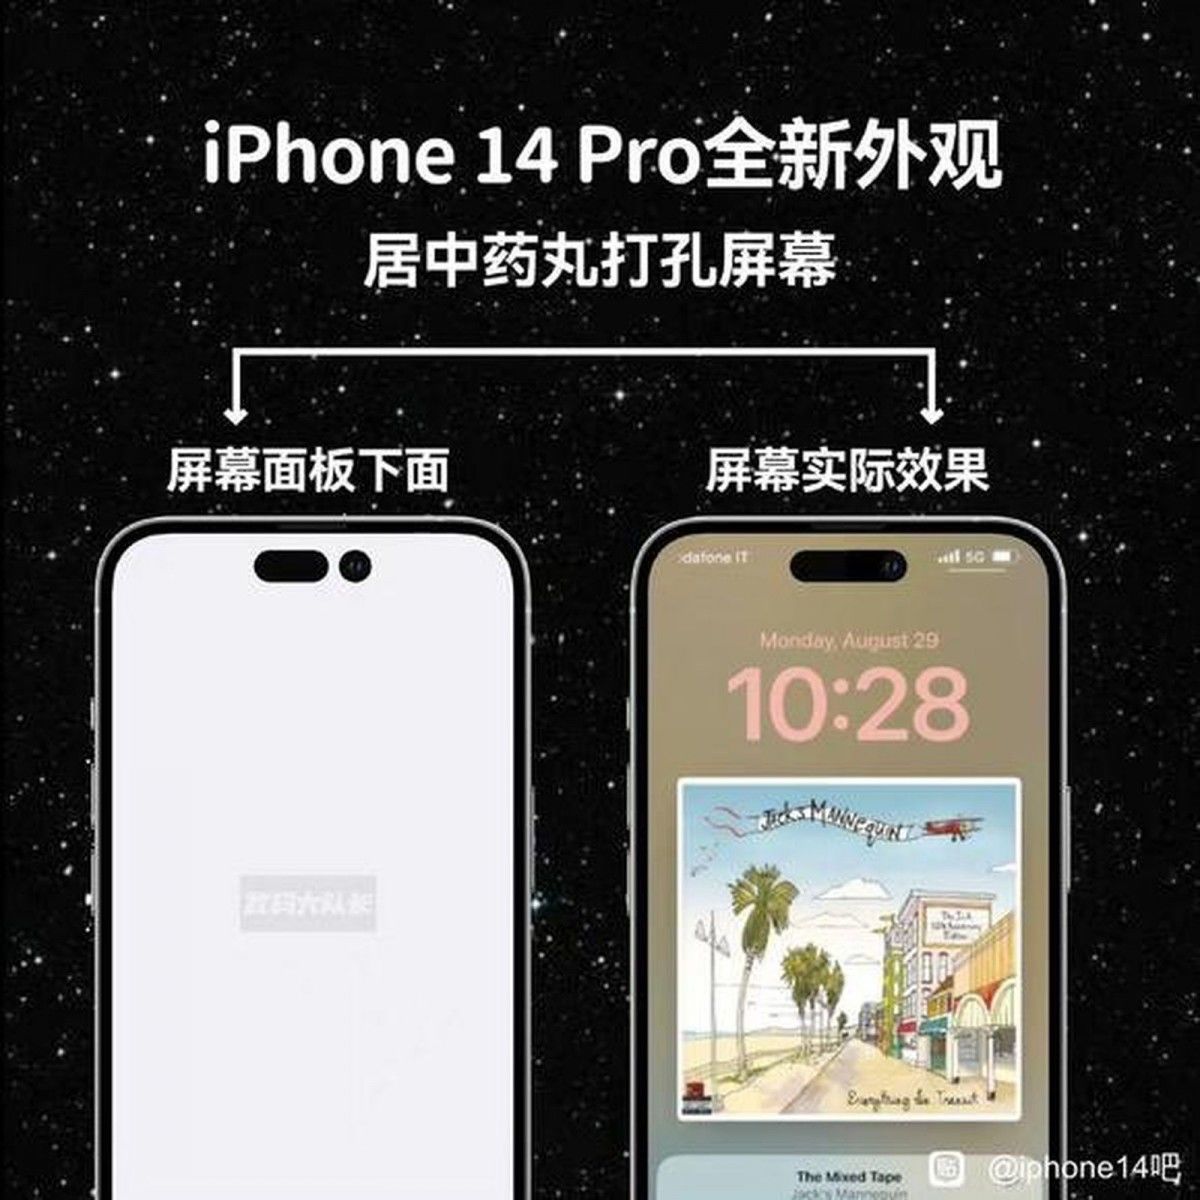 iPhone 14 Pros